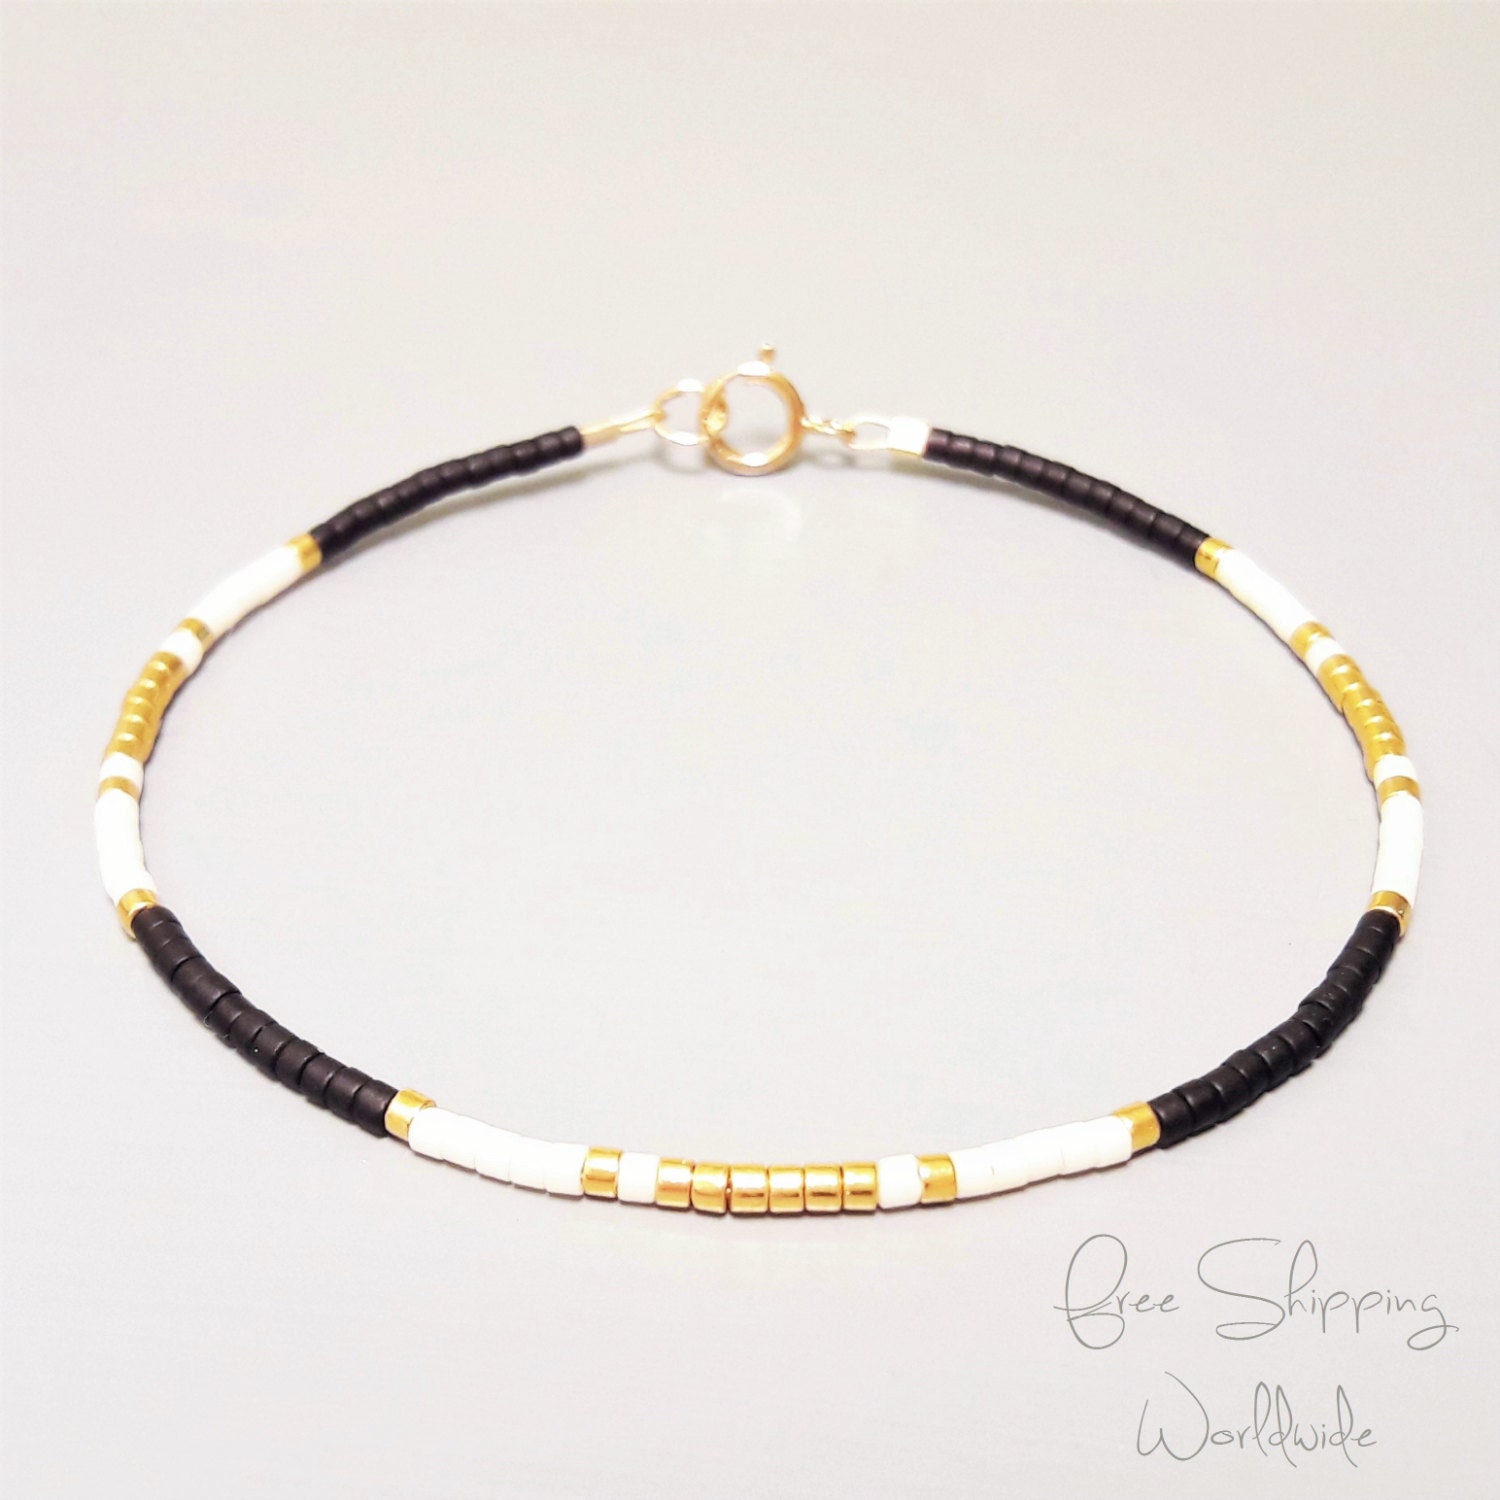 Minimalist bracelet minimalist jewelry simple bracelet modern | Etsy